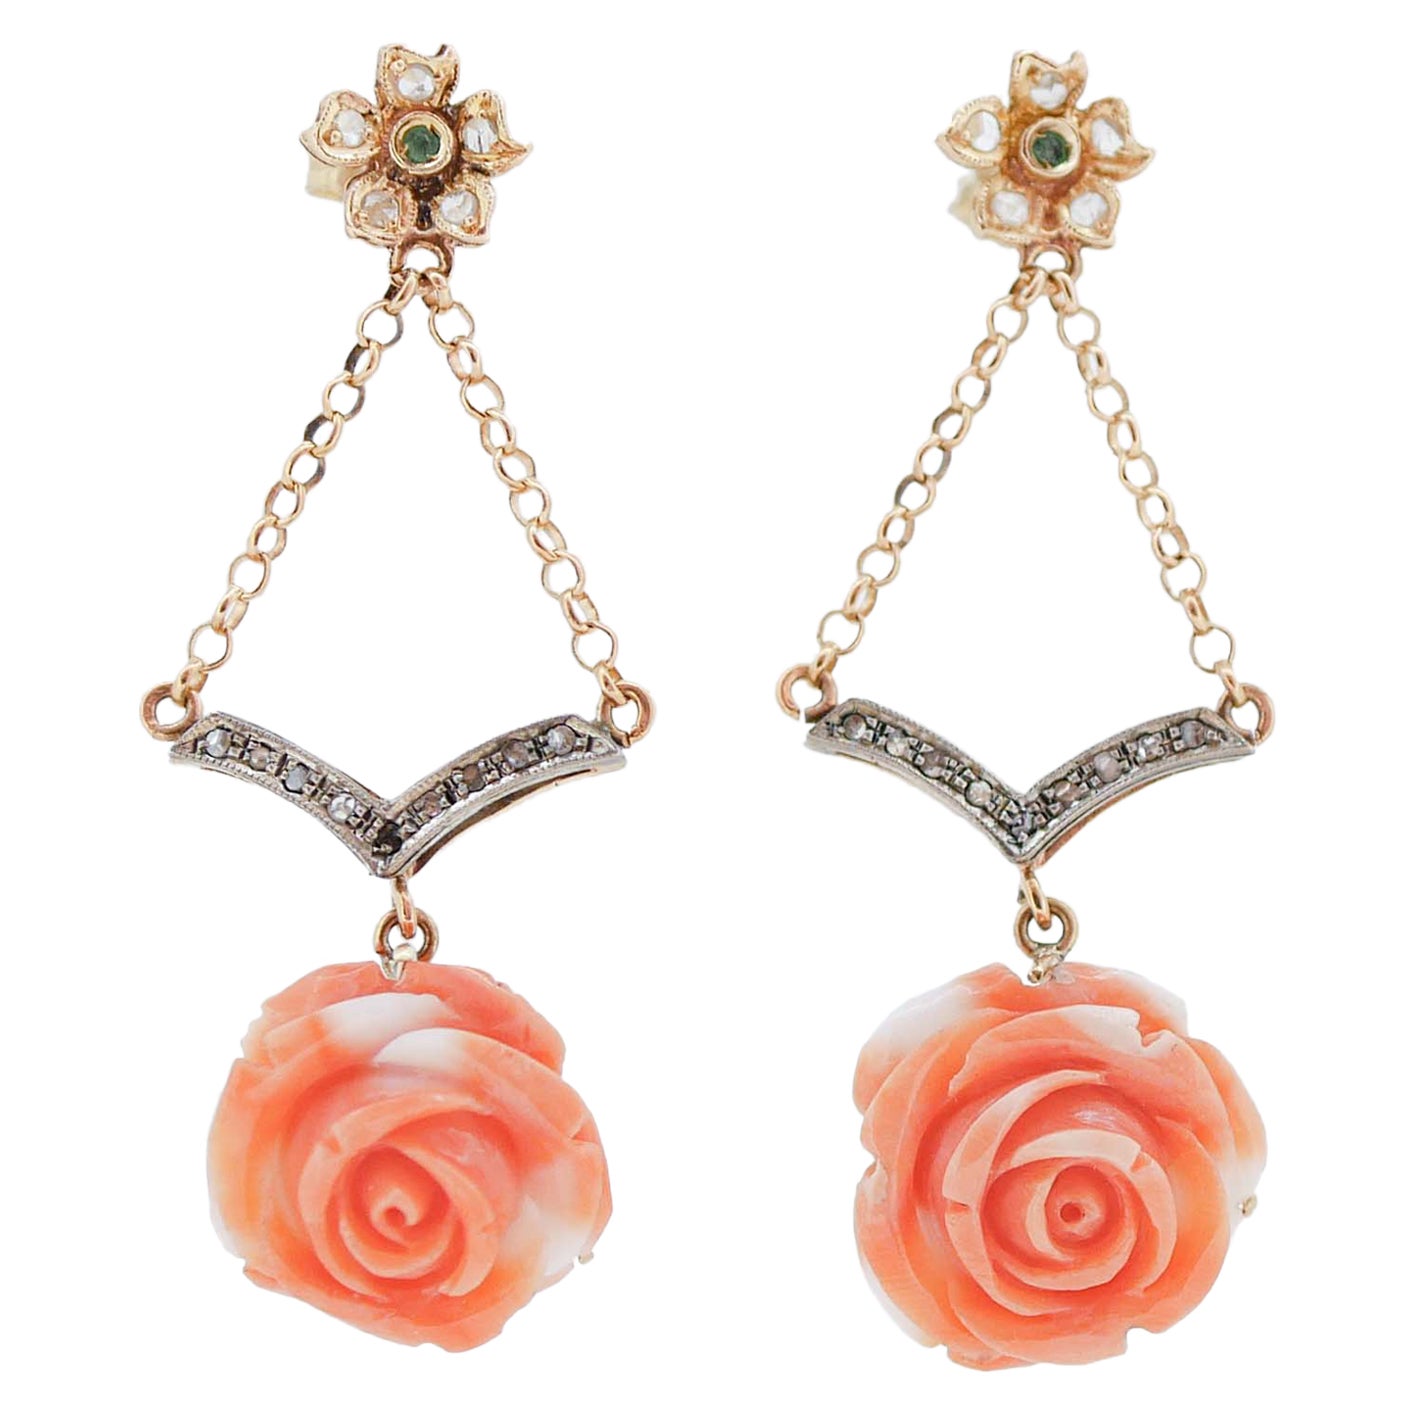 Coral, Tsavorite, Diamonds, 14 Karat Rose Gold and Silver Dangle Earrings.